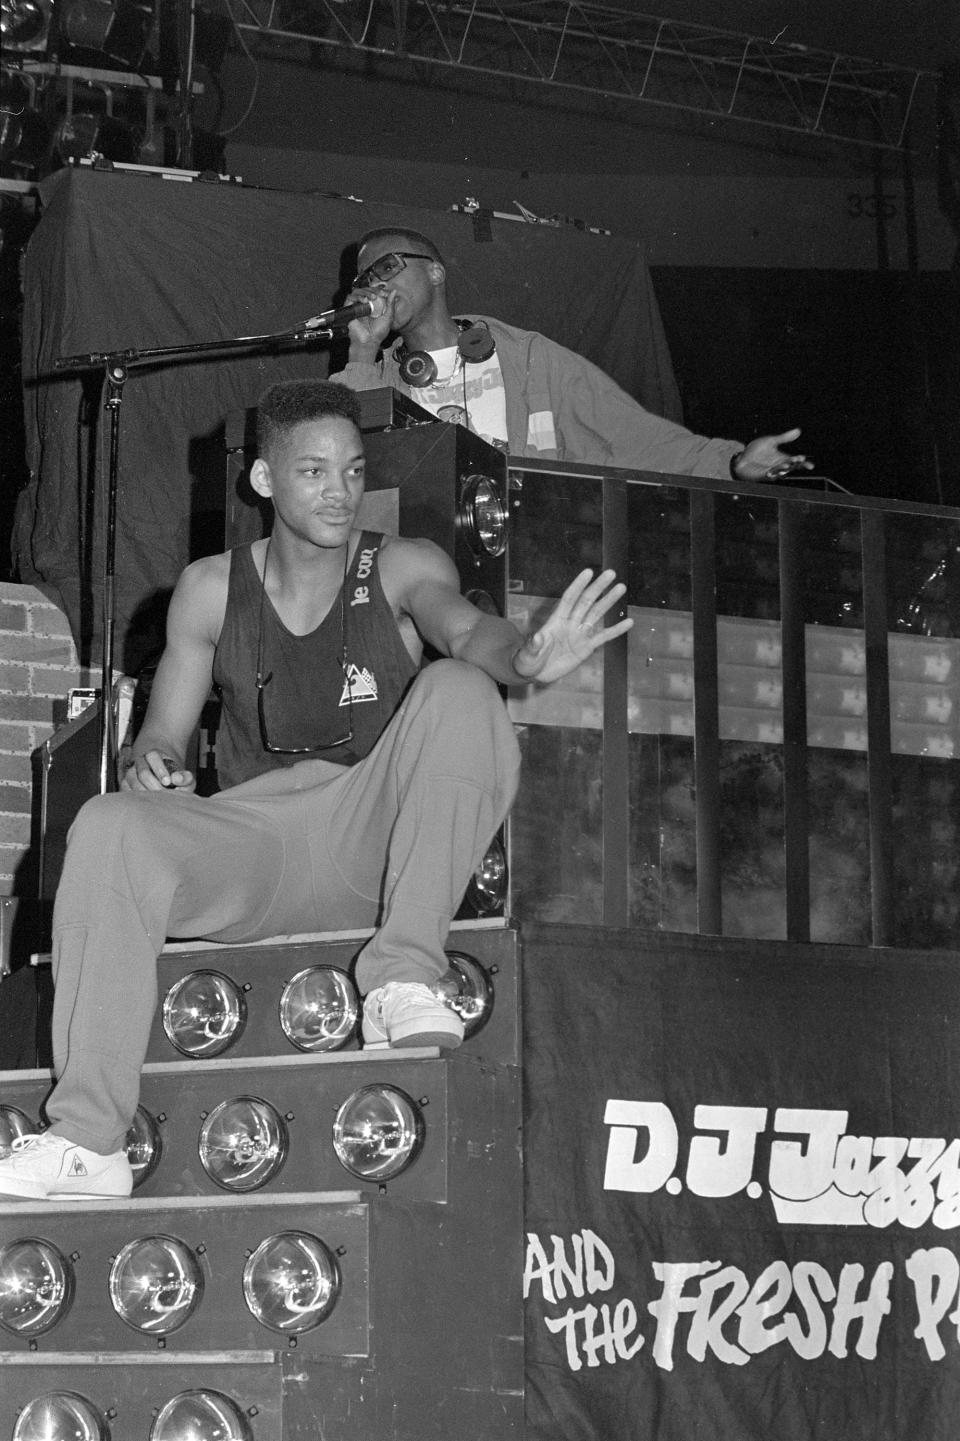 DJ Jazzy Jeff & The Fresh Prince perform on stage.